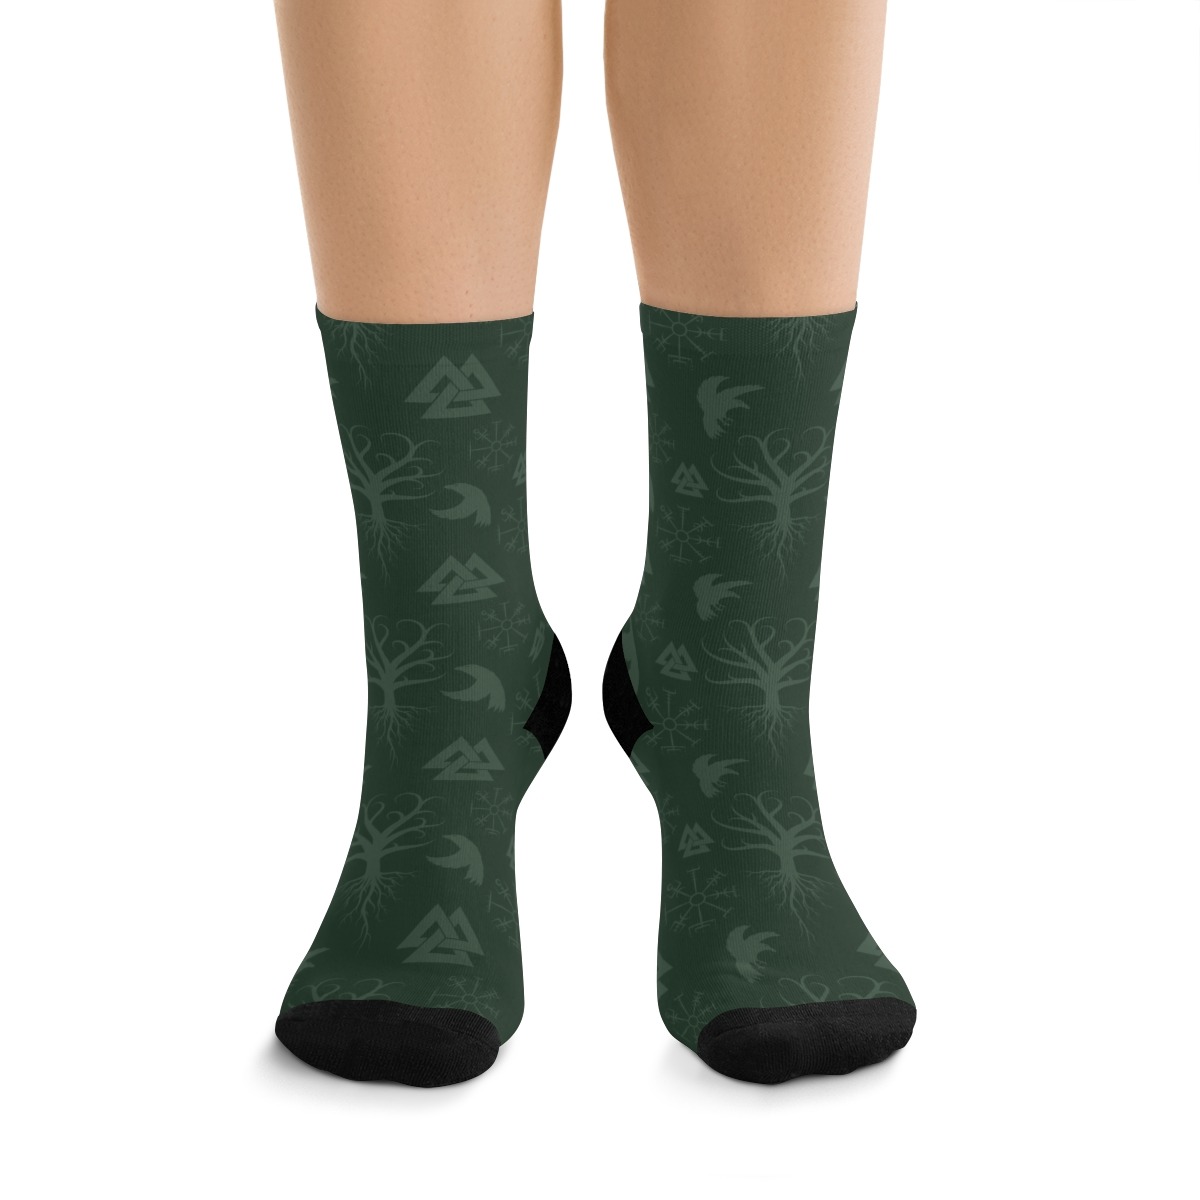 Green Norse Symbols Socks